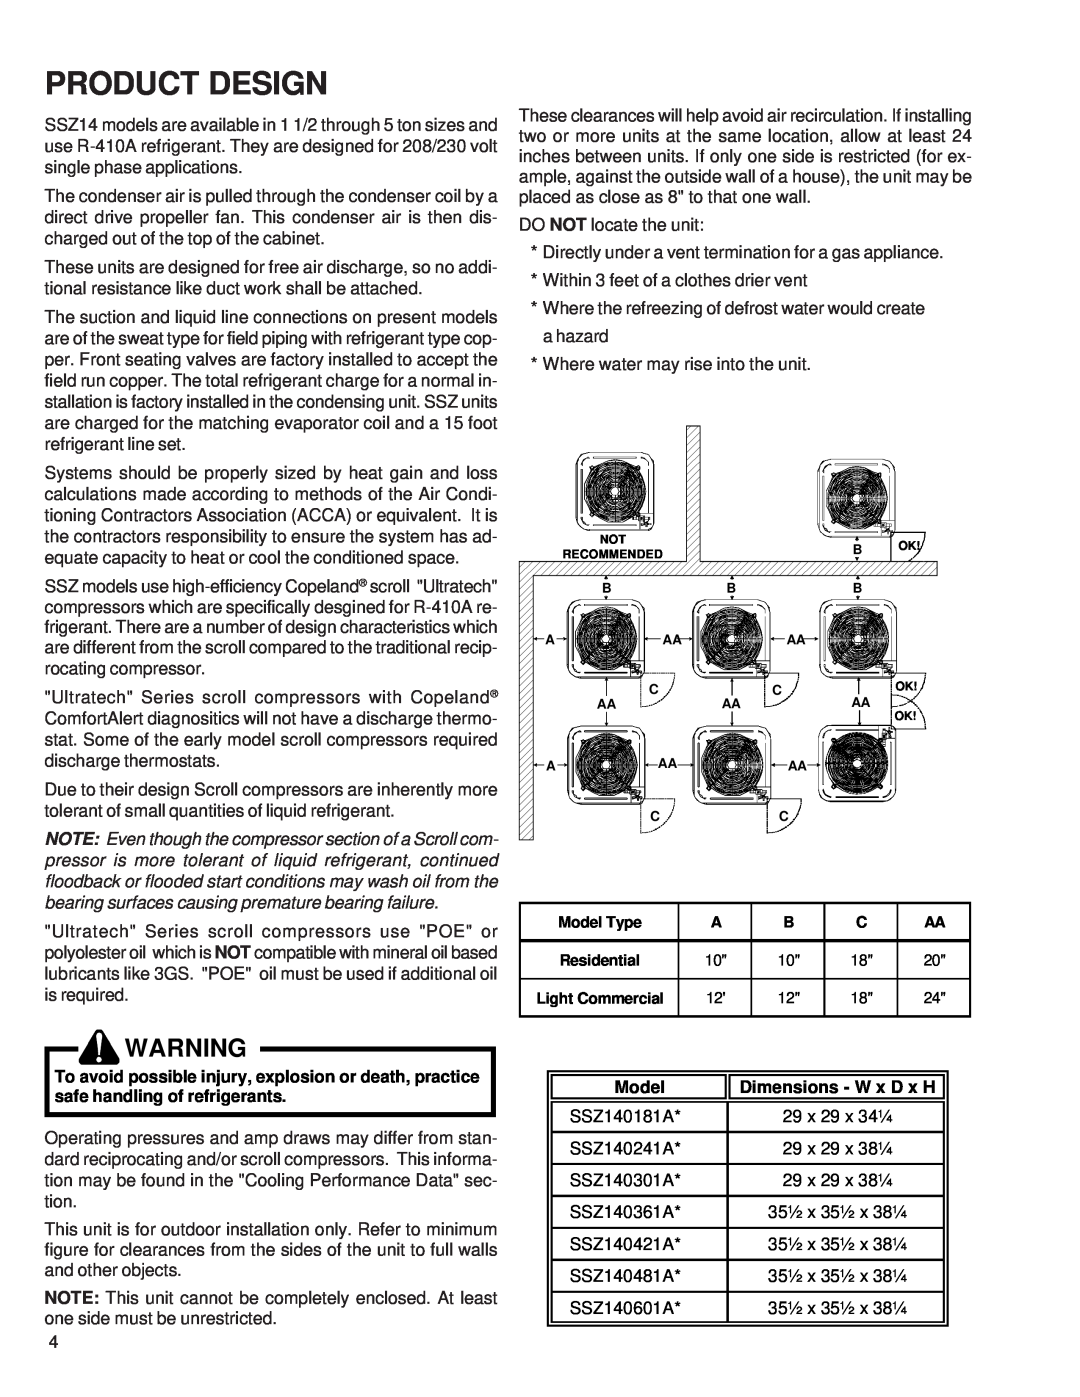 Goodman Mfg SSZ140181A service manual Product Design, Model, Dimensions - W x D x H 